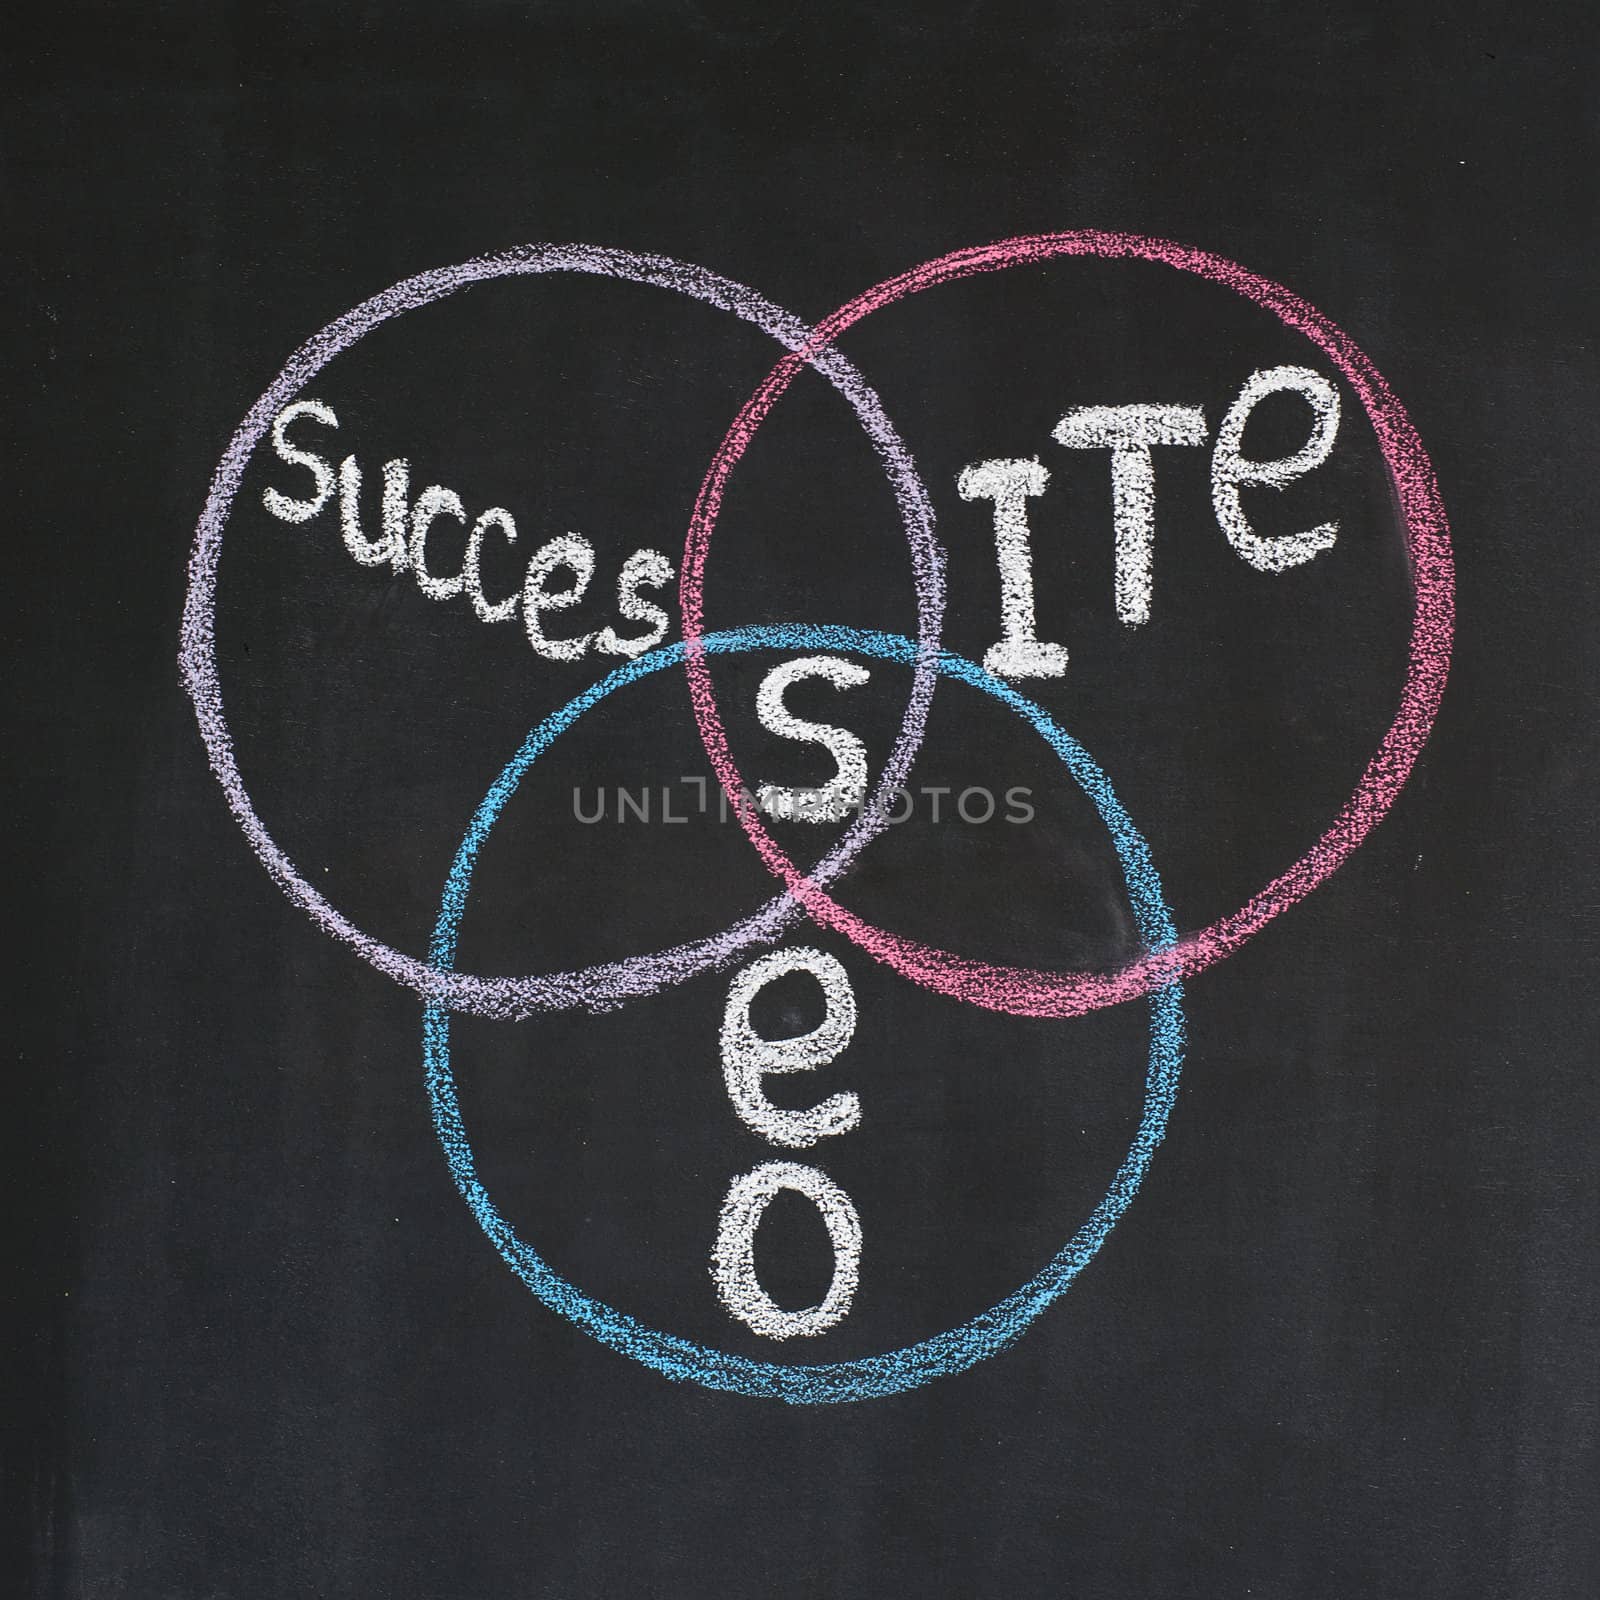 Seo diagram with three words "Seo", "Site", "Success"